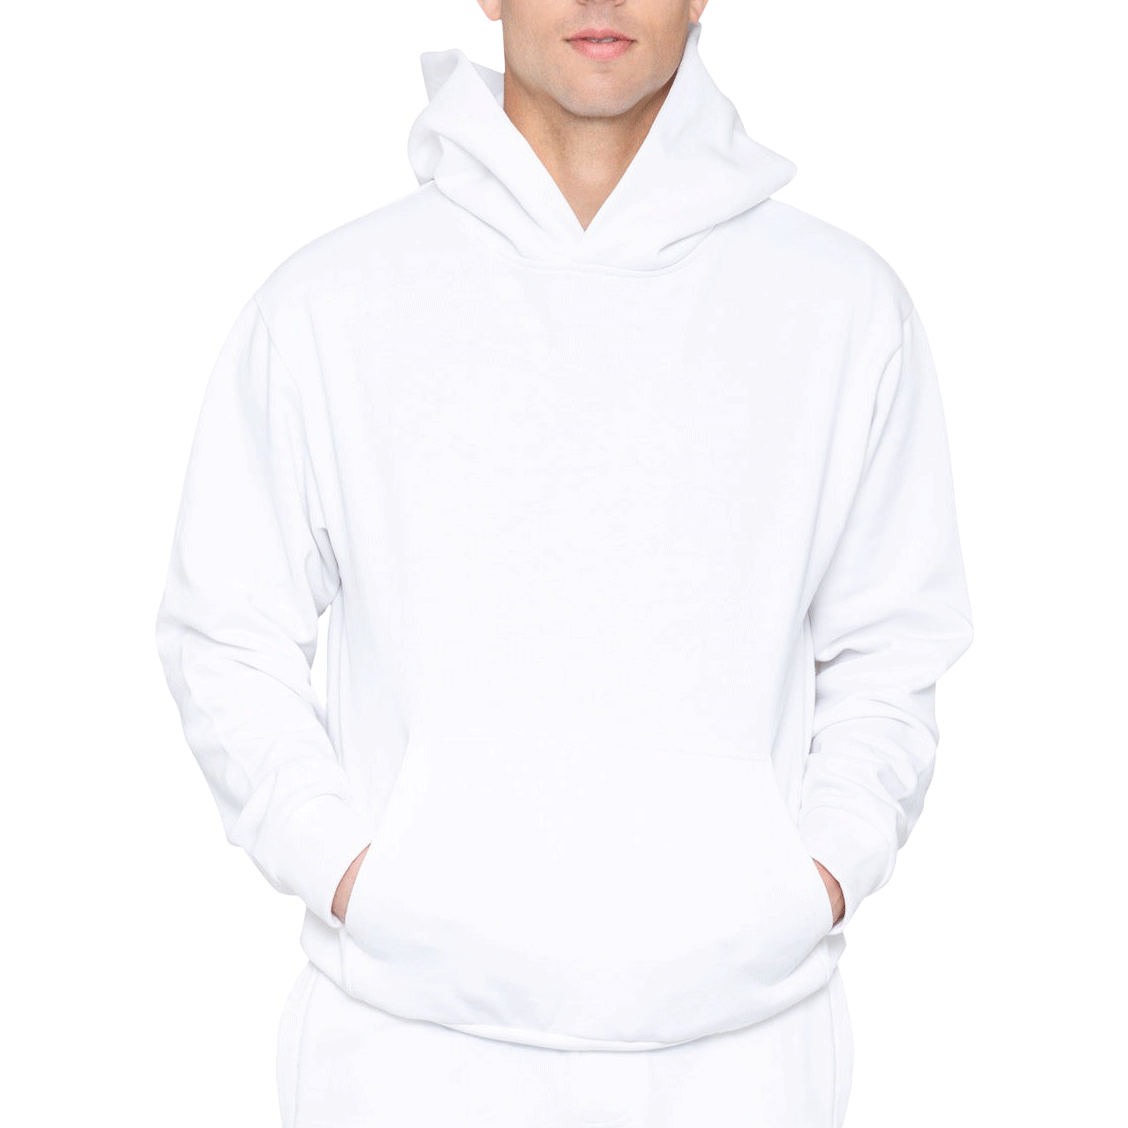 Unisex Urban Pullover Hooded Sweatshirt Canadian Custom Apparel